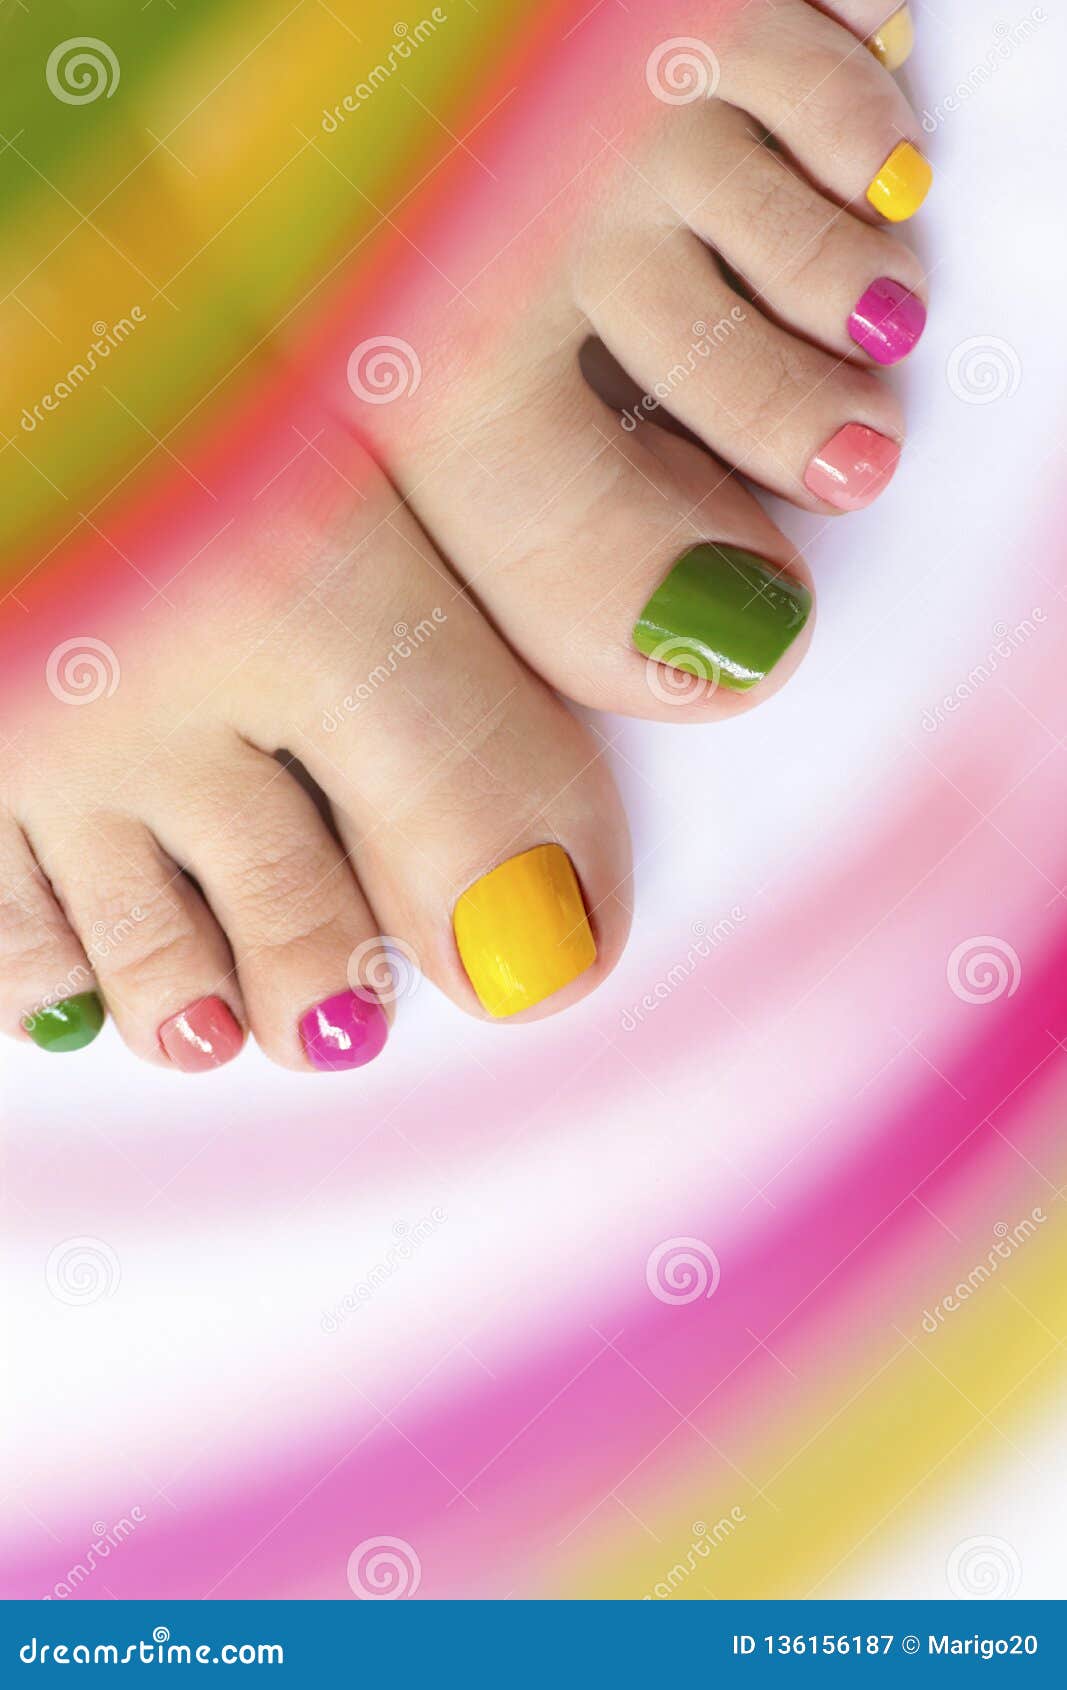 The Best Non-Toxic Nail Polishes | Feet nails, Toe nails, Toe nail color